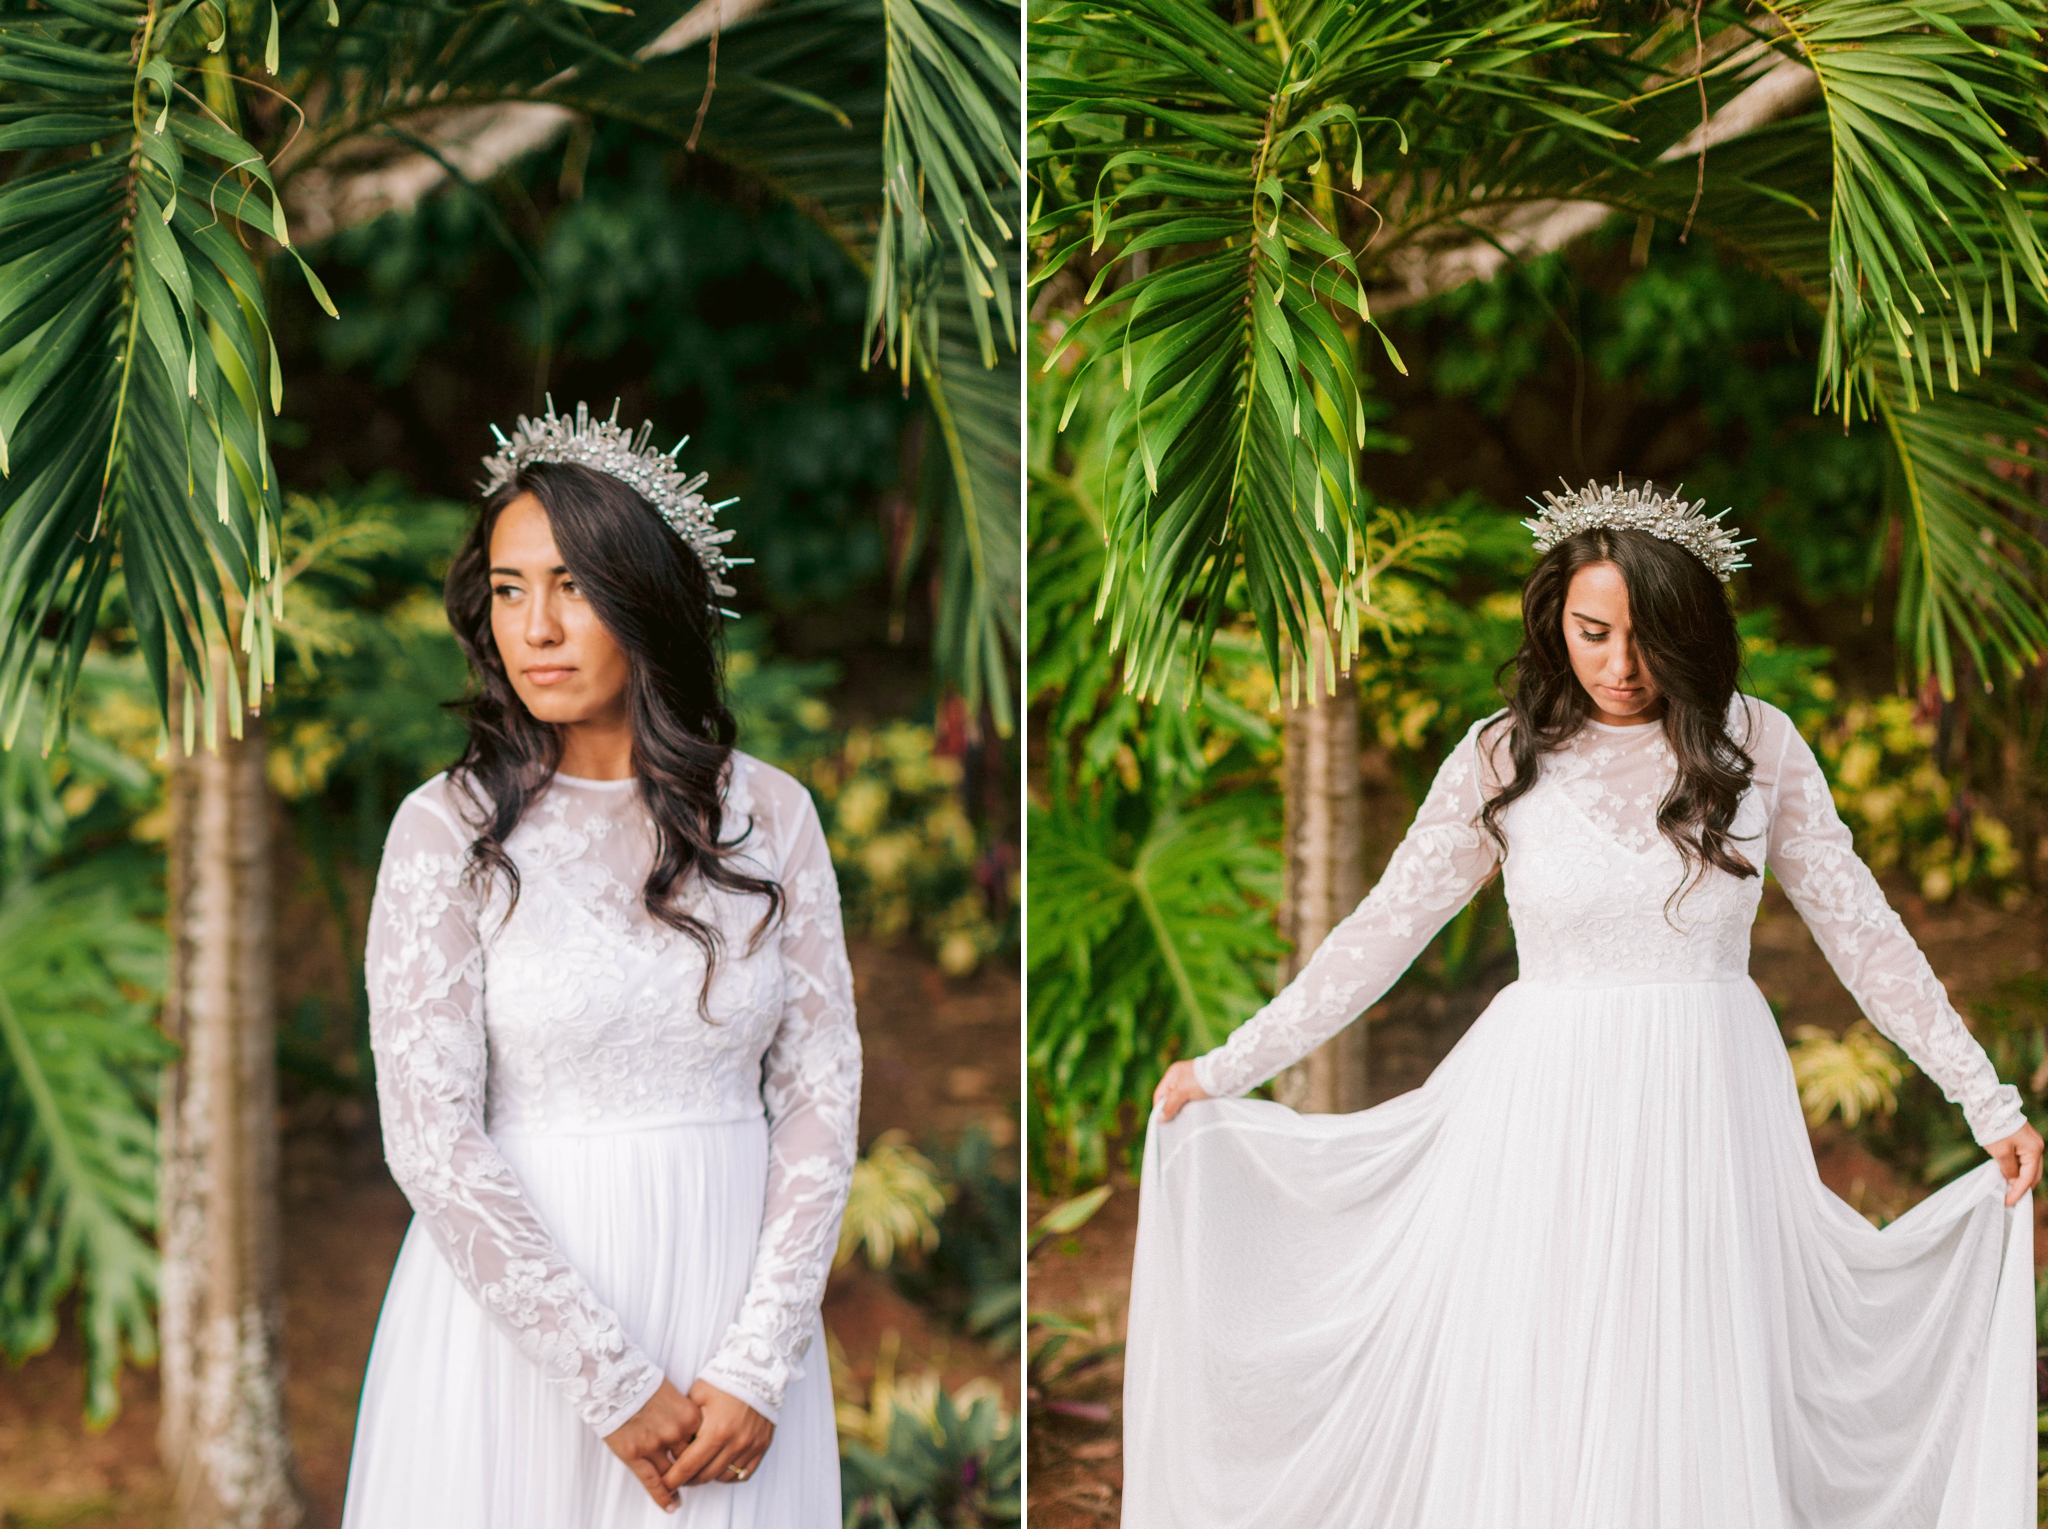  Hawaiian Bridal Portraits - Bride is wearing a wedding dress by asos and a unique crown under palm trees - Ana + Elijah - Wedding at Loulu Palm in Haleiwa, HI - Oahu Hawaii Wedding Photographer 